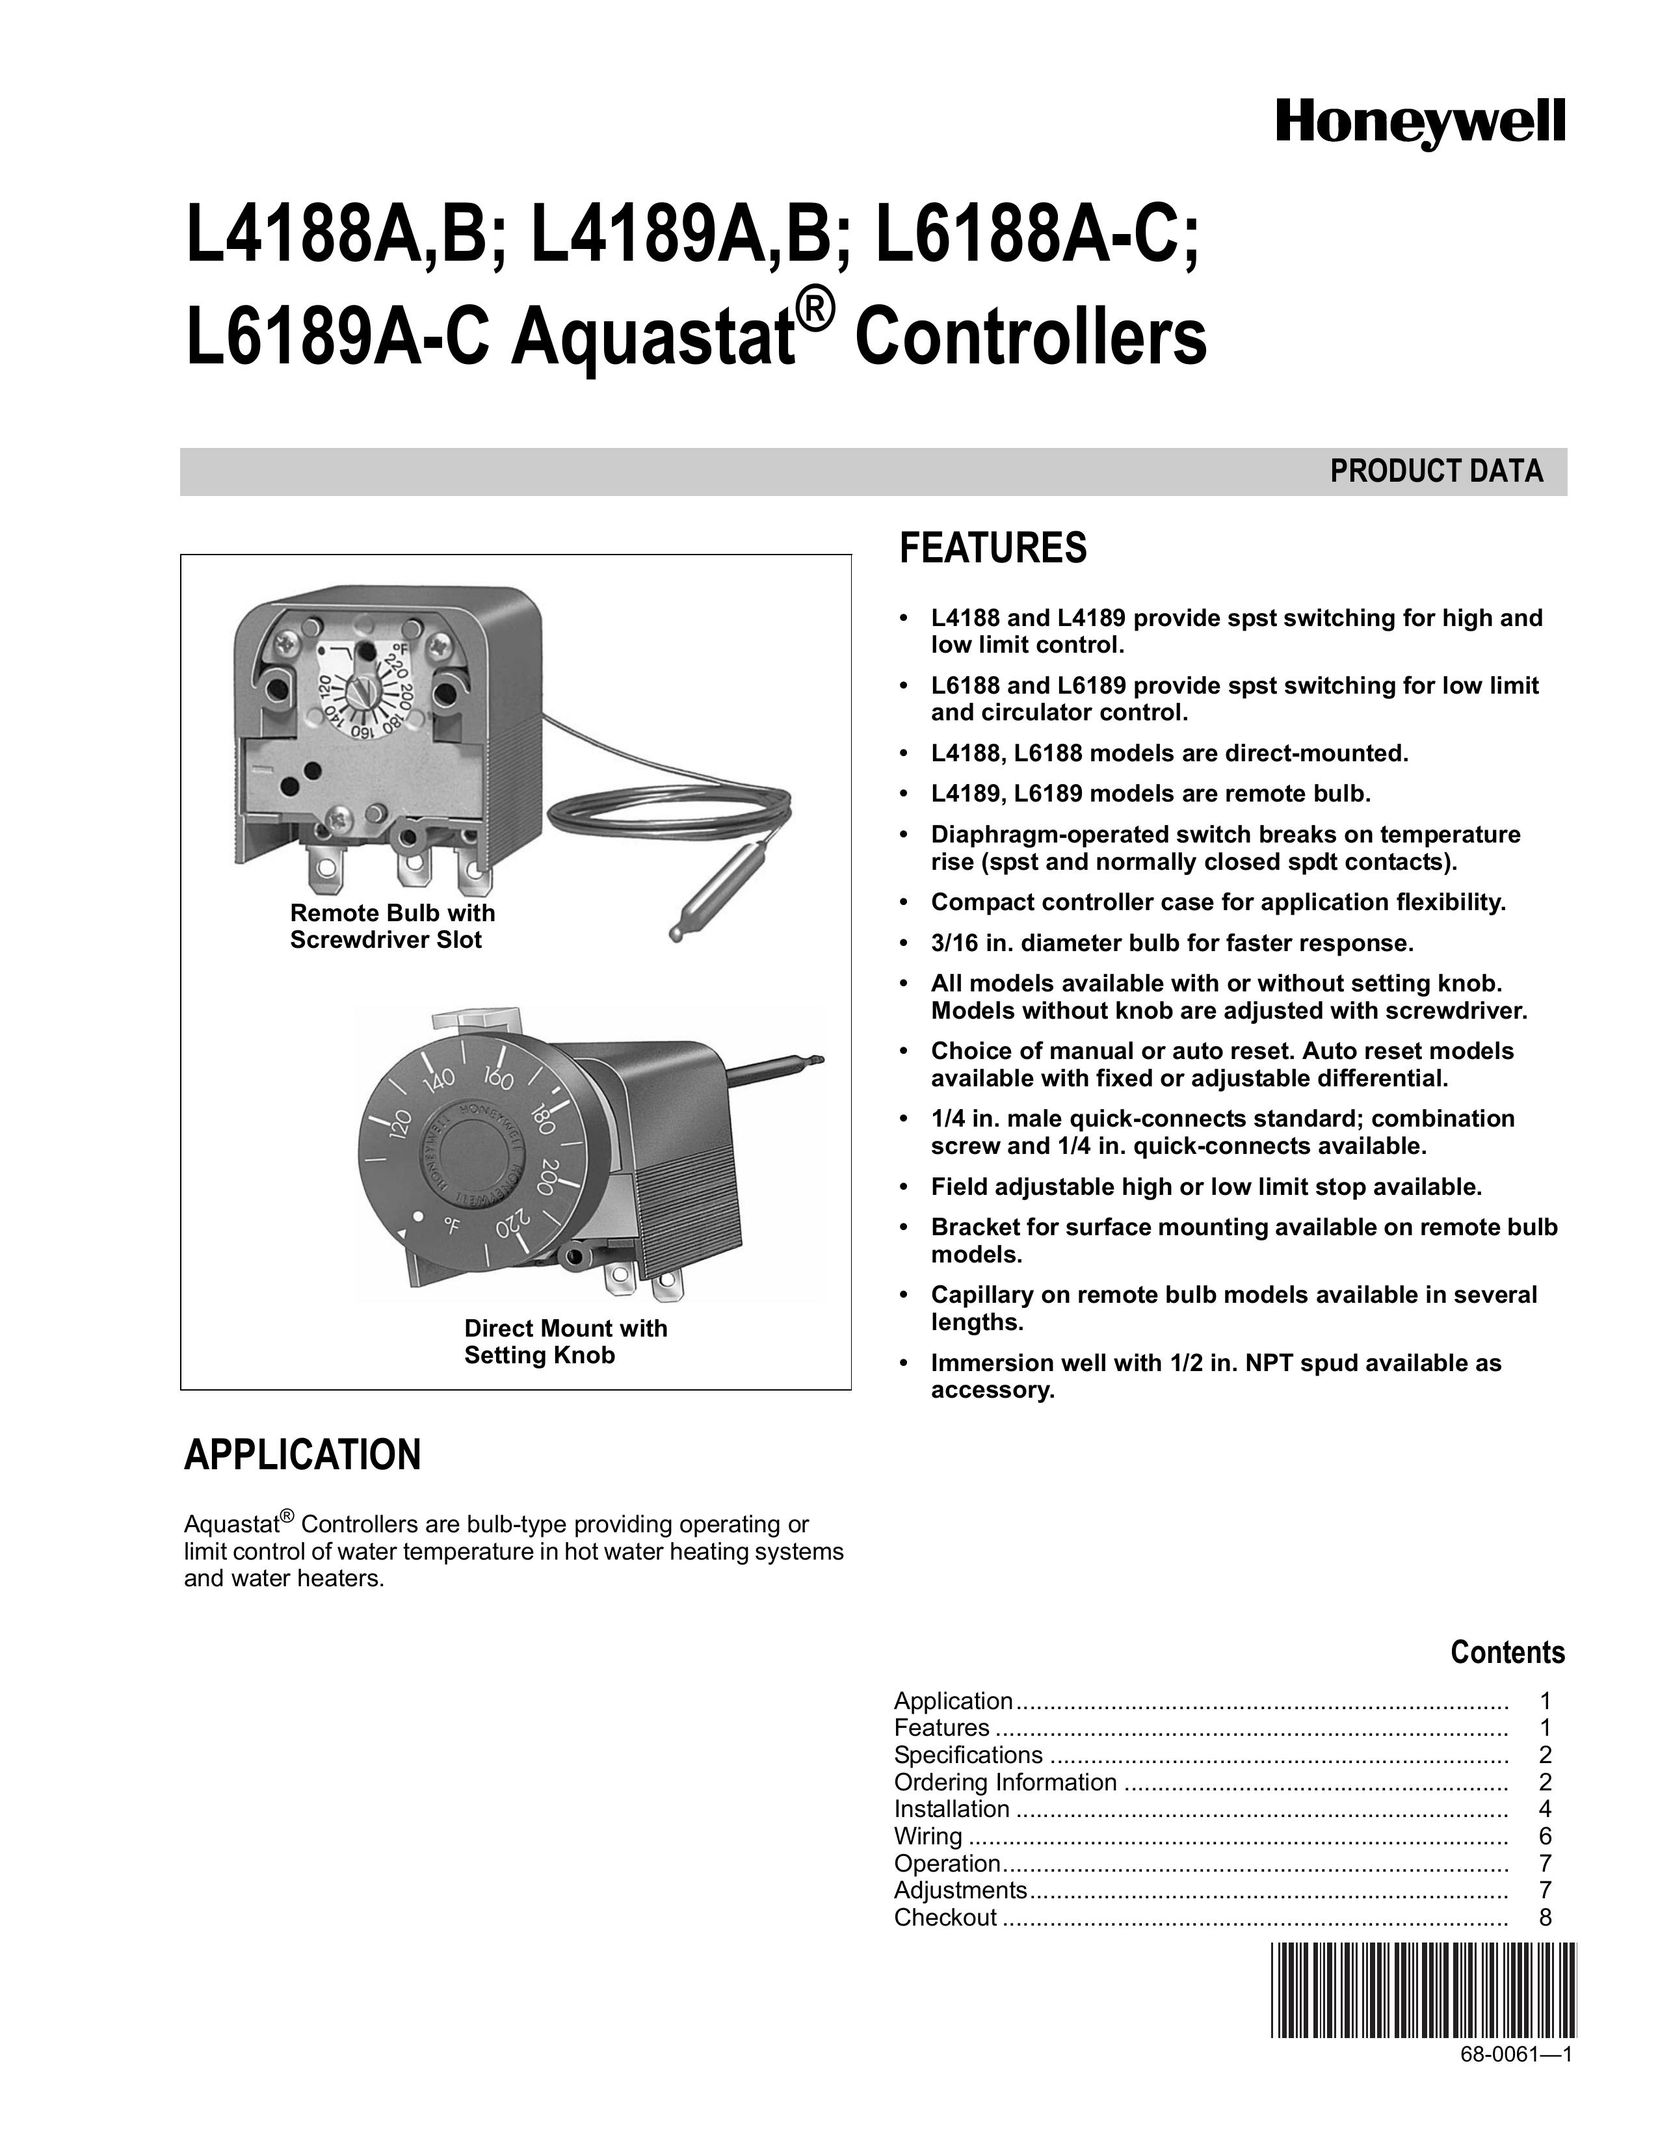 Honeywell L6189A-C Water Heater User Manual